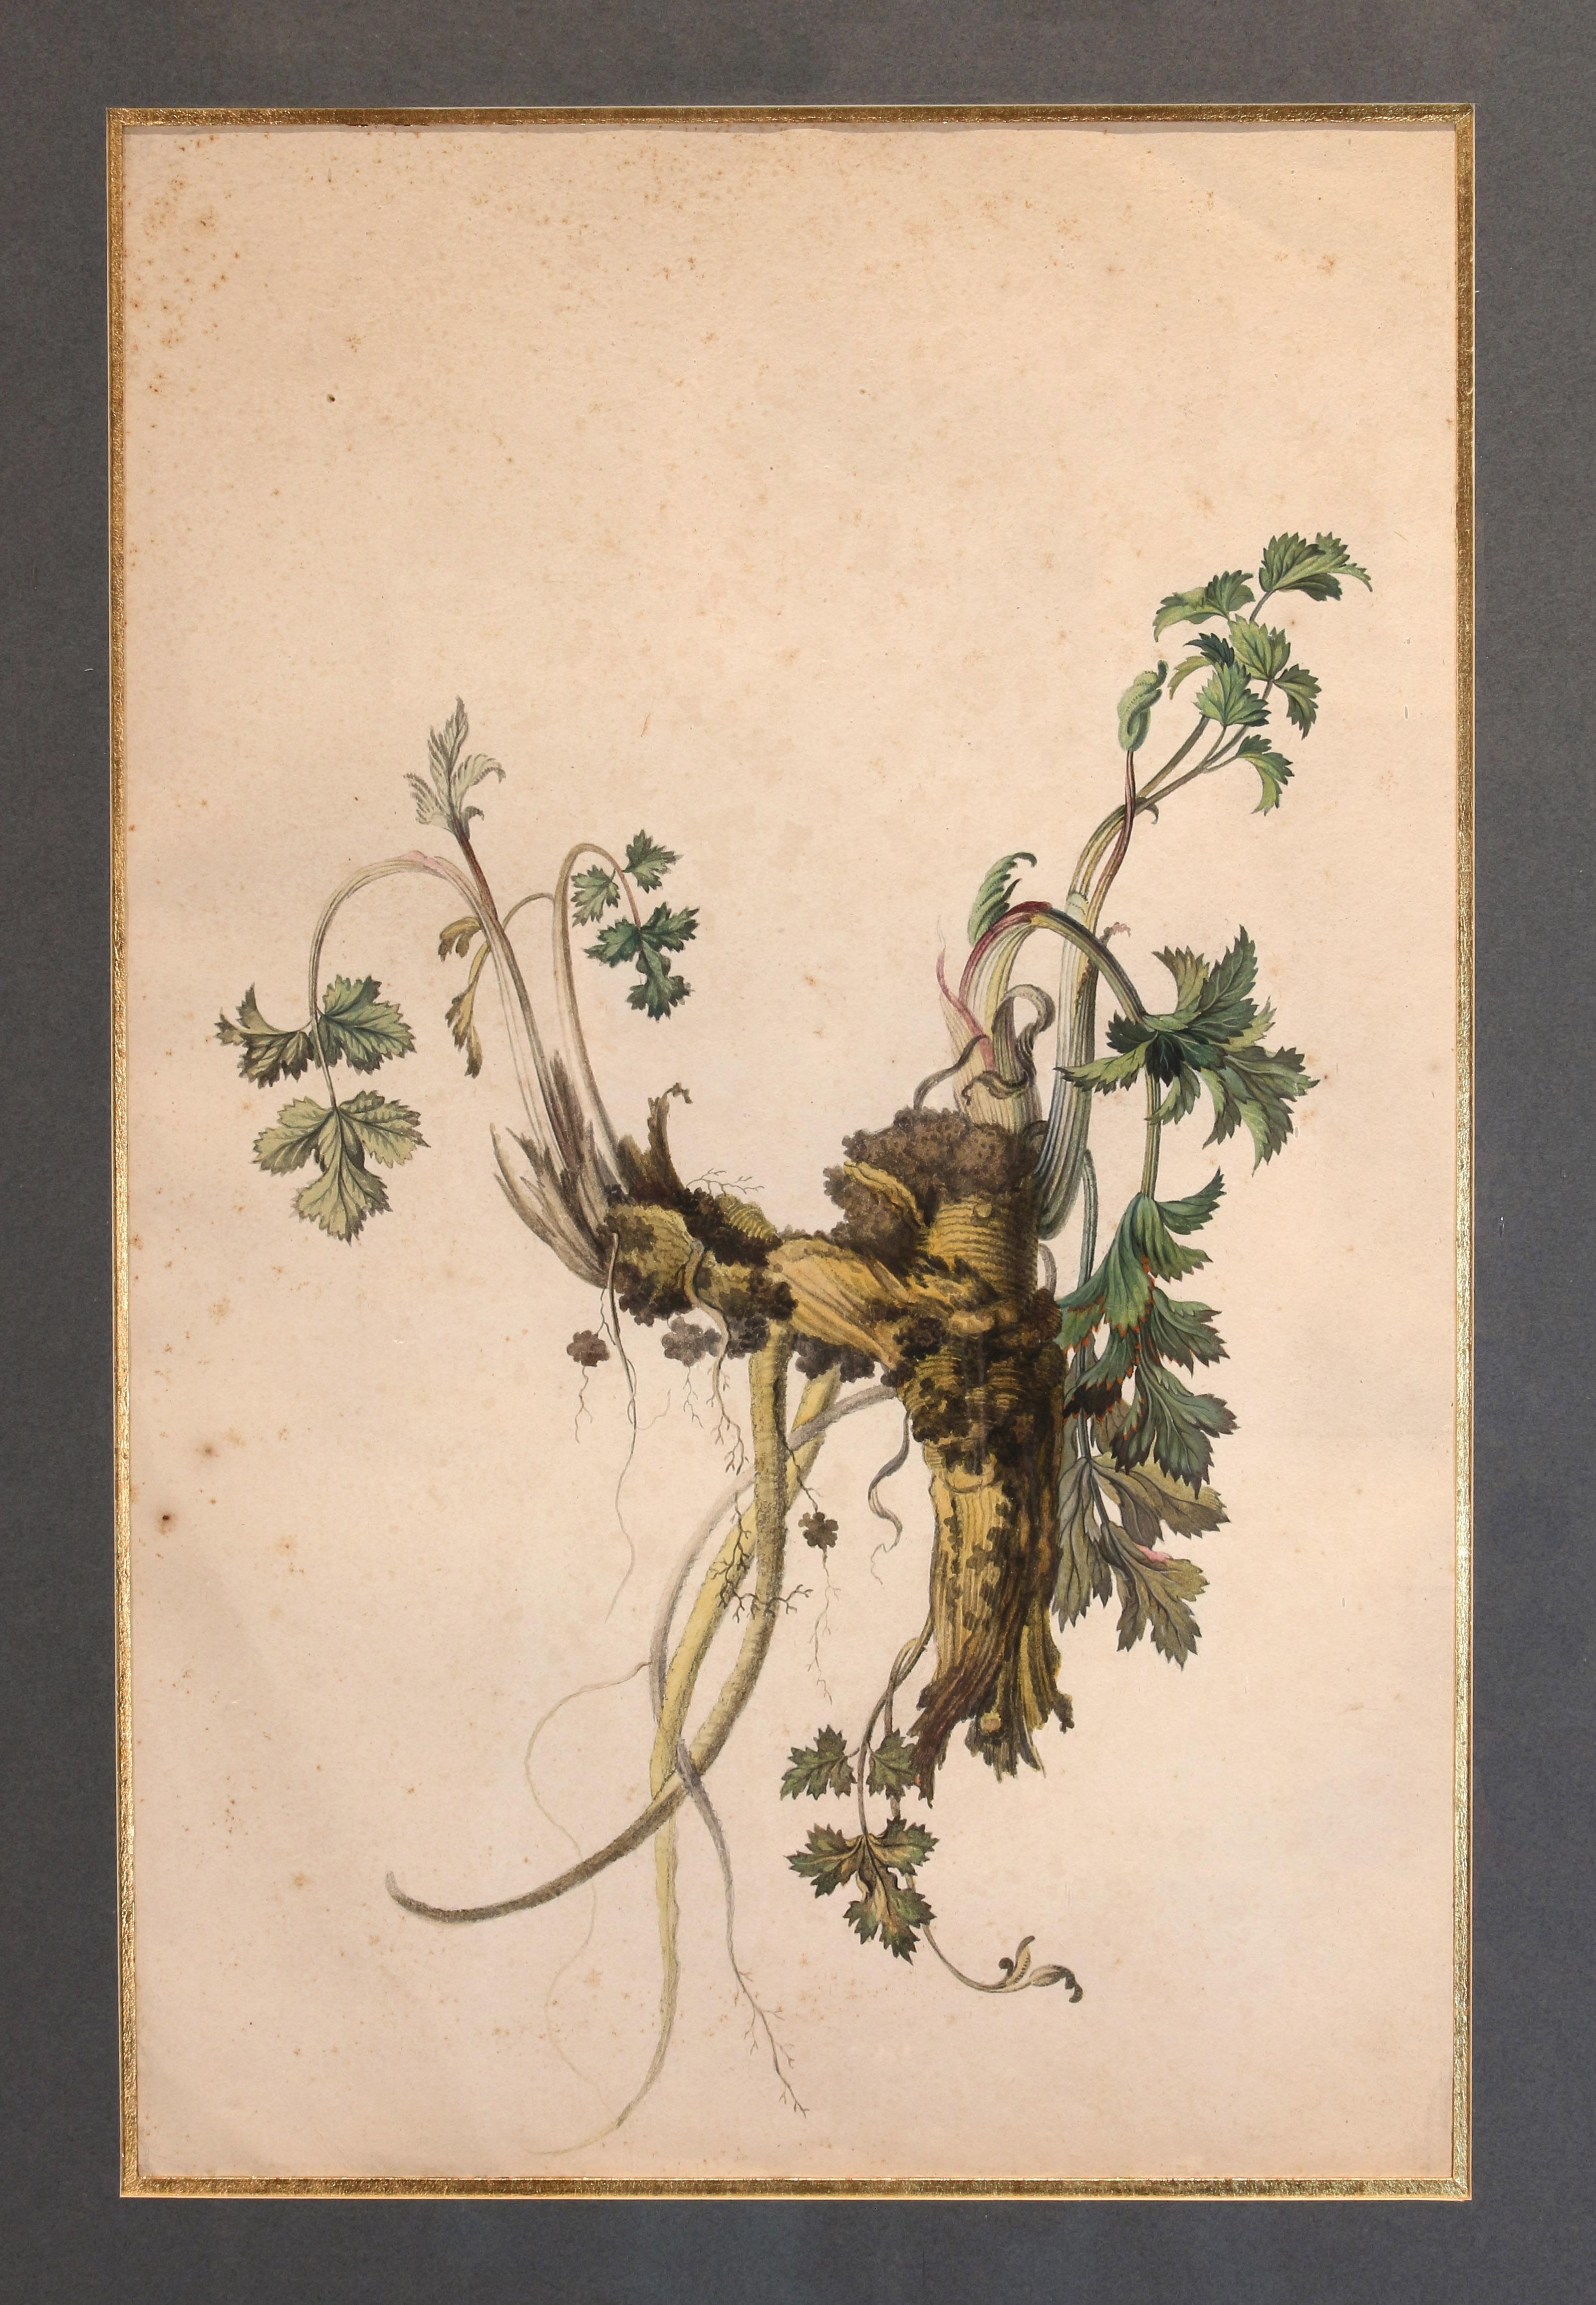 Early 19th century French botanical crayon & aquarelle in antique oak frame. Label en verso: Ecole de Mulhouse, Etude de fenouil, Crayon et aquarelle, Debut du 19eme siecle. Foxing. One deep scuff on frame. Attached is a card exploring fennel &